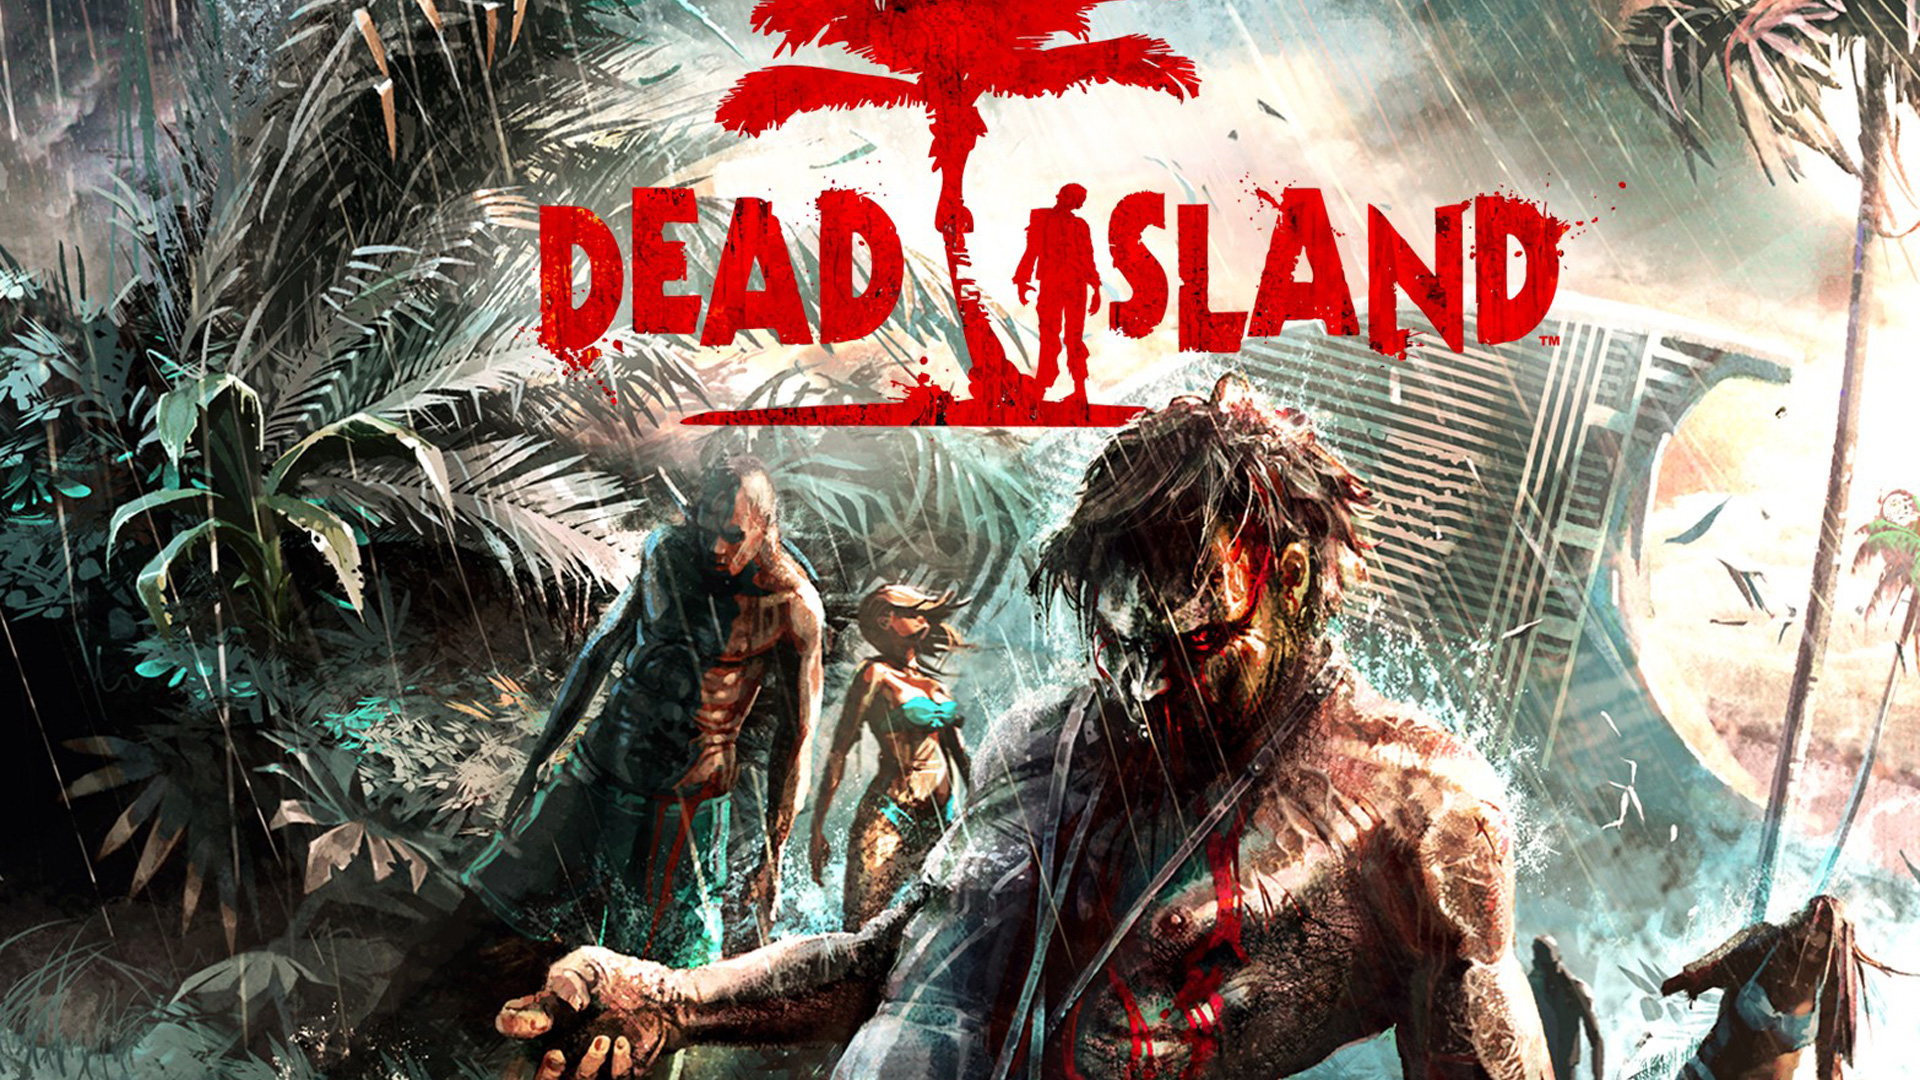 Jogo Dead Island Definitive Collection Xbox One Midia Fisica - celltronics